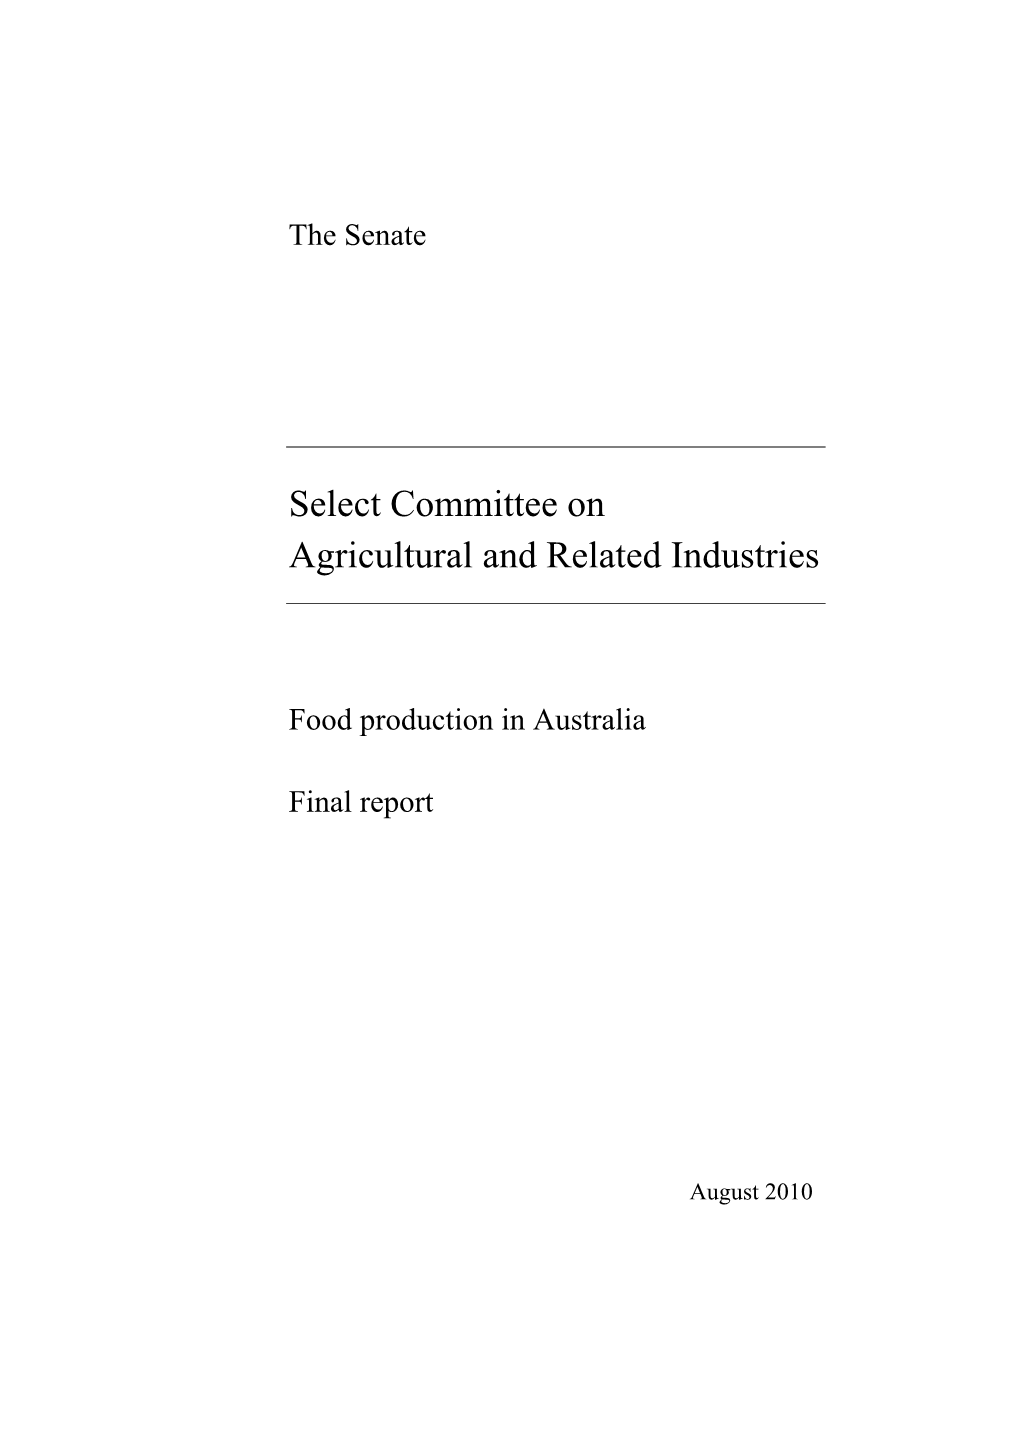 Food Production in Australia